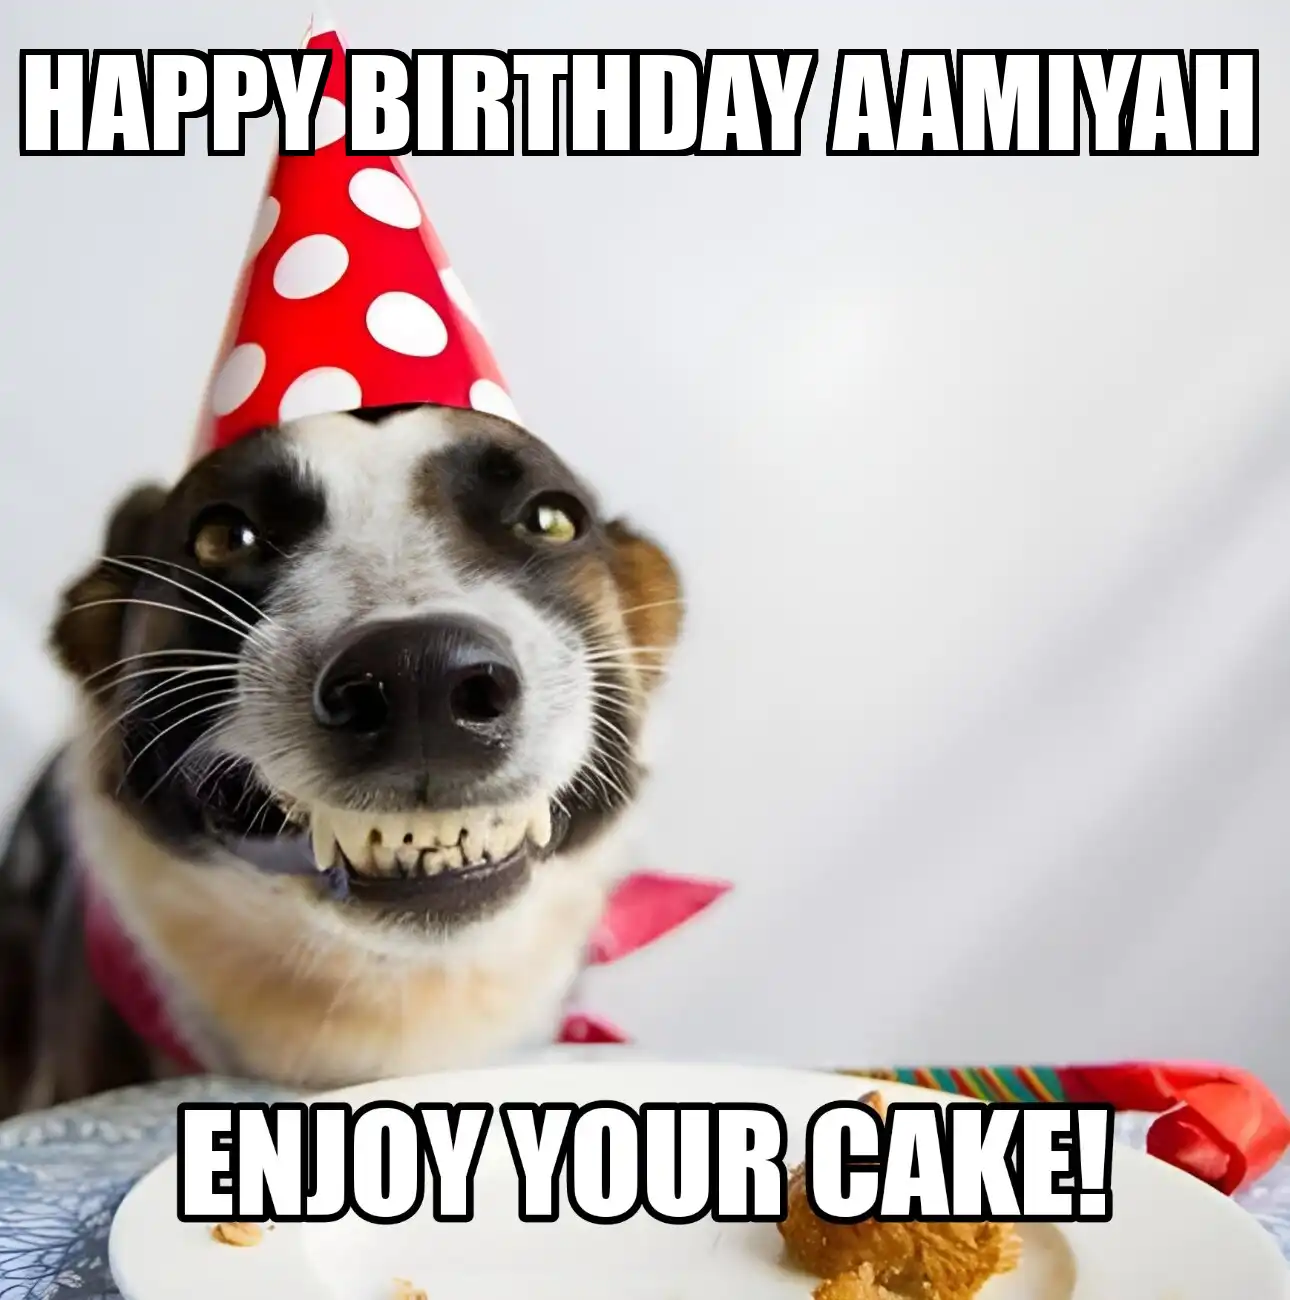 Happy Birthday Aamiyah Enjoy Your Cake Dog Meme